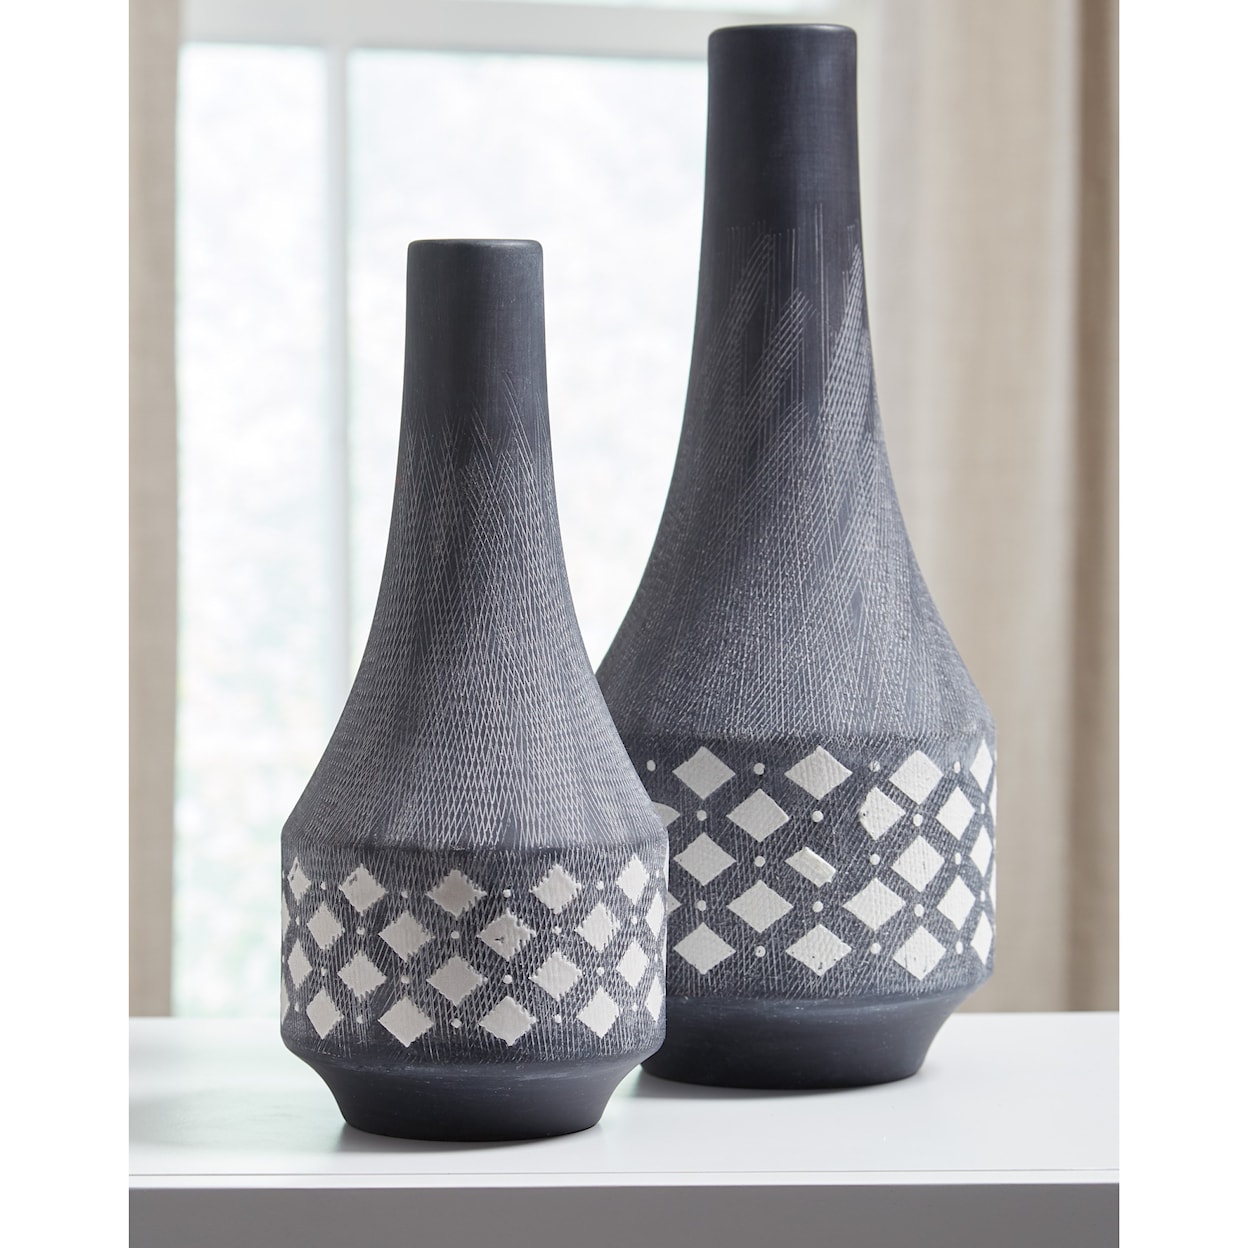 Benchcraft Accents Dornitilla Black/White Vase Set